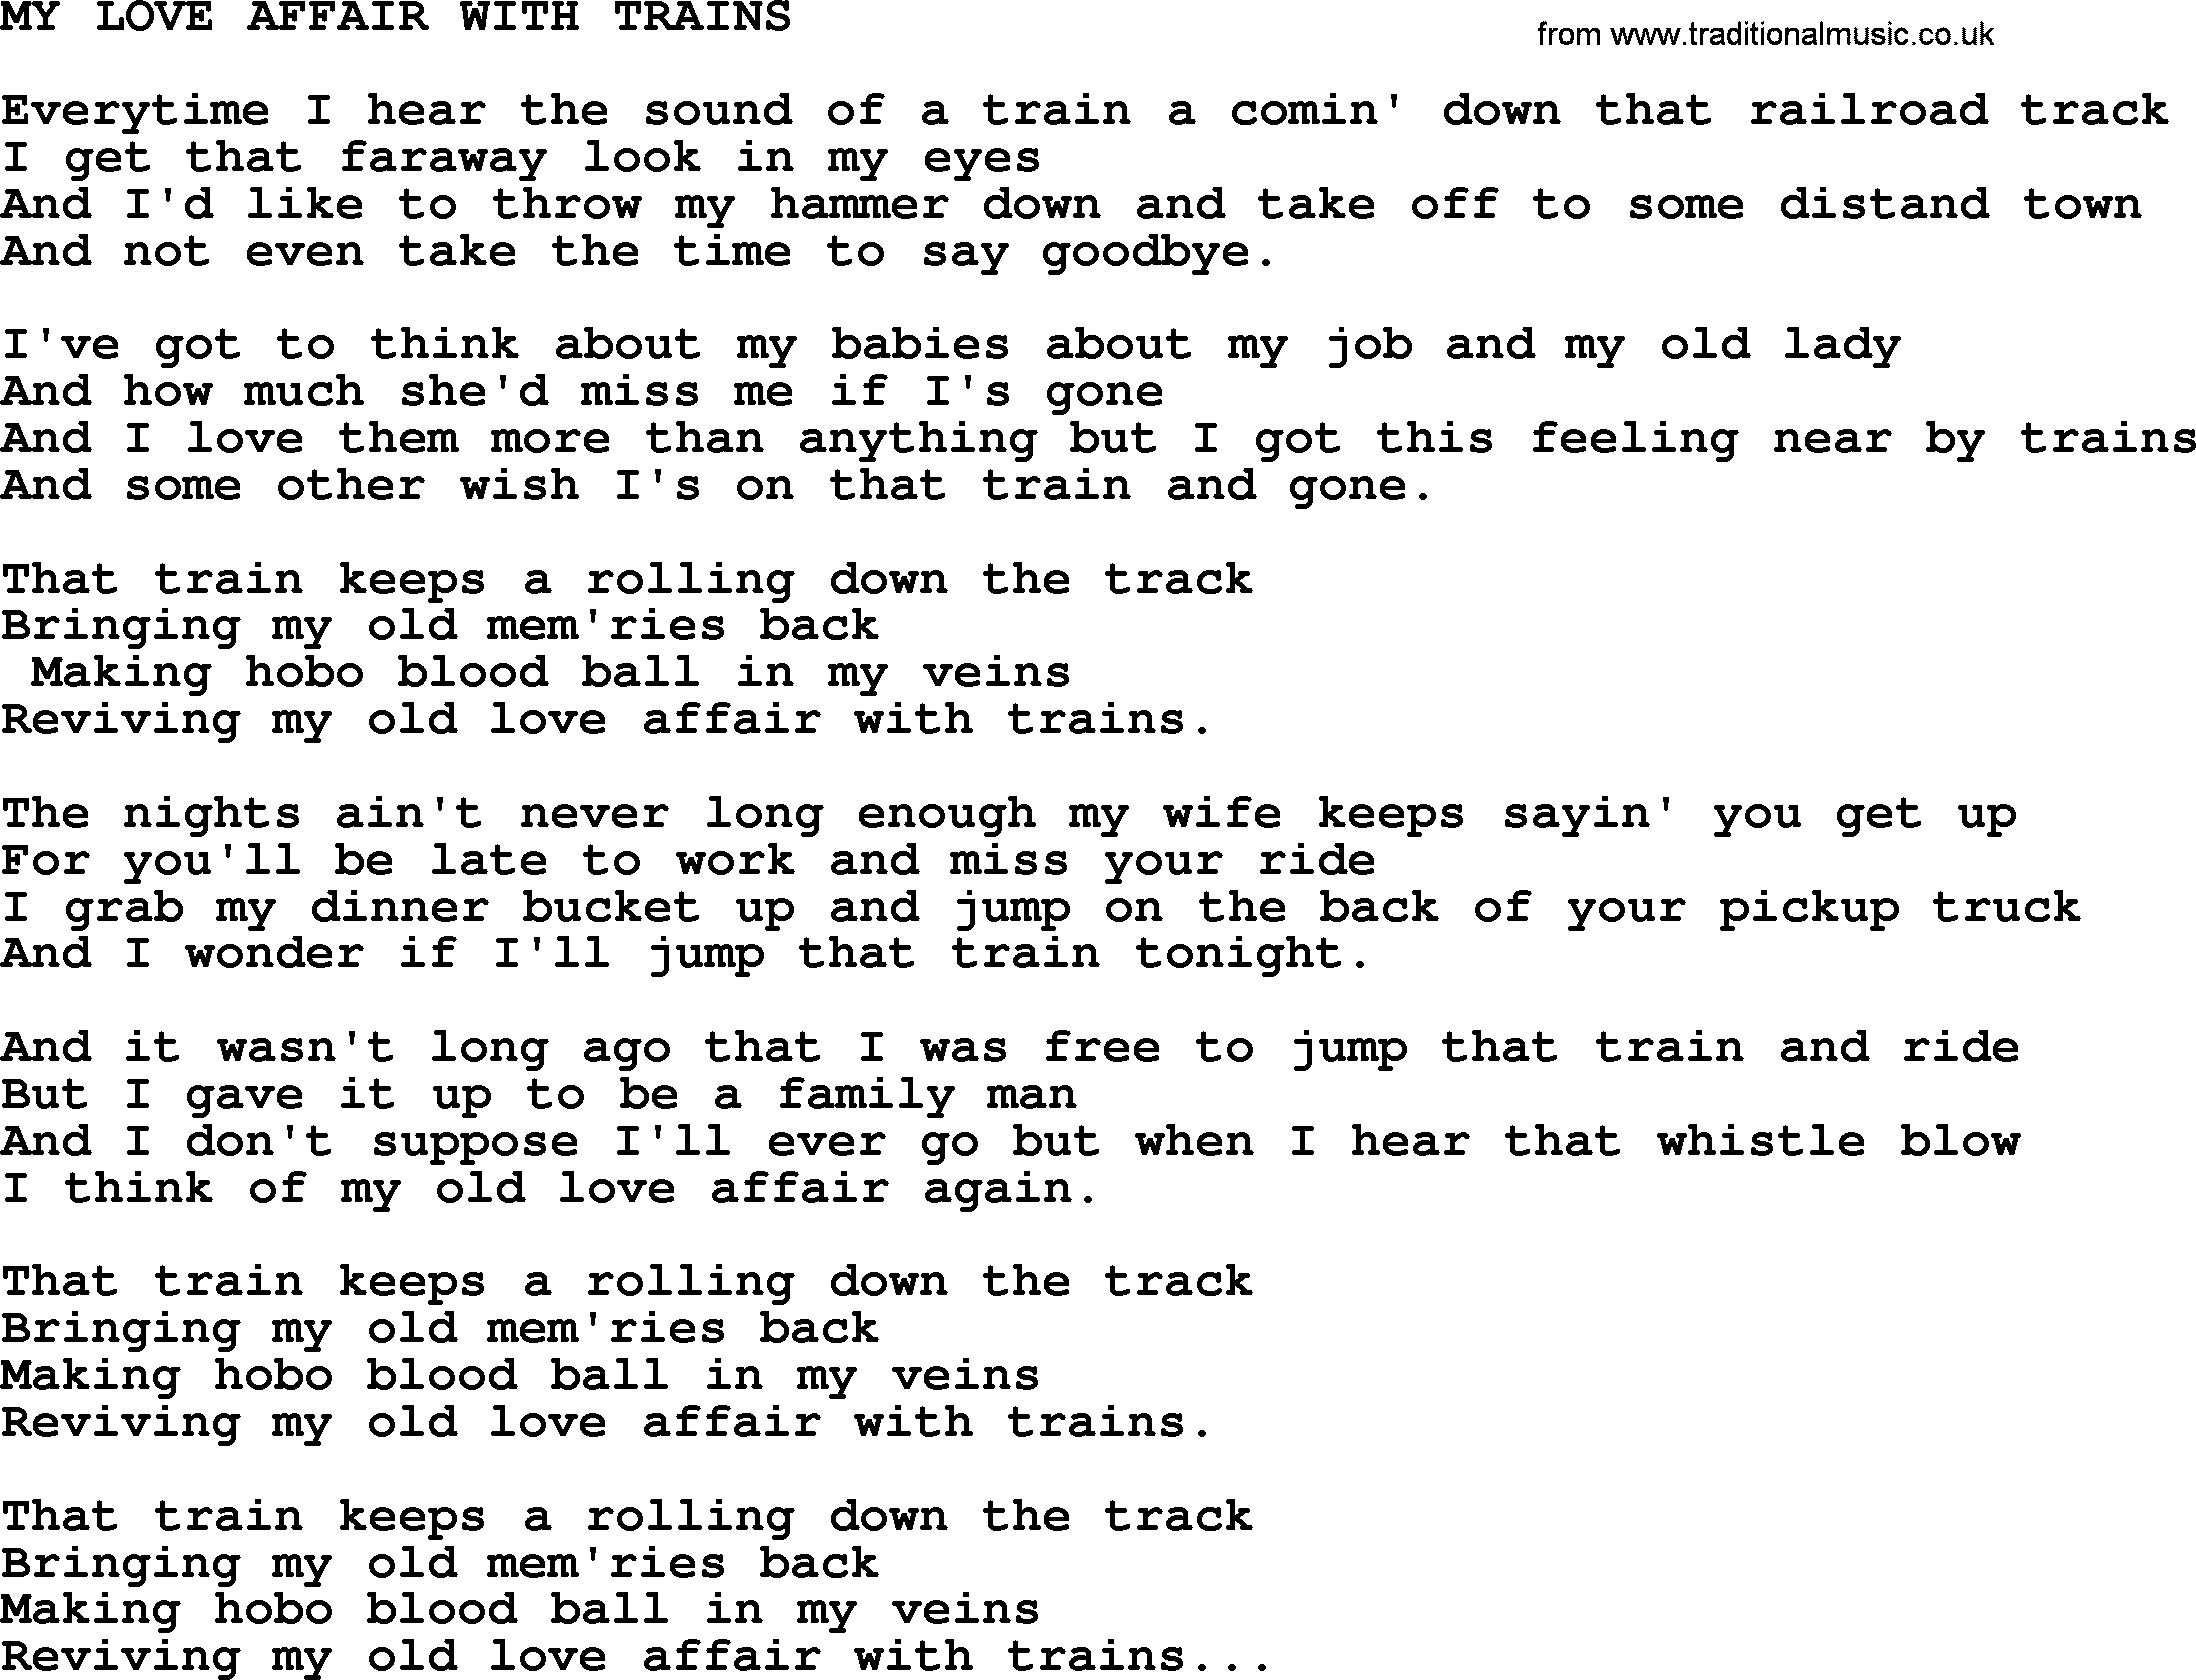 Merle Haggard song: My Love Affair With Trains, lyrics.